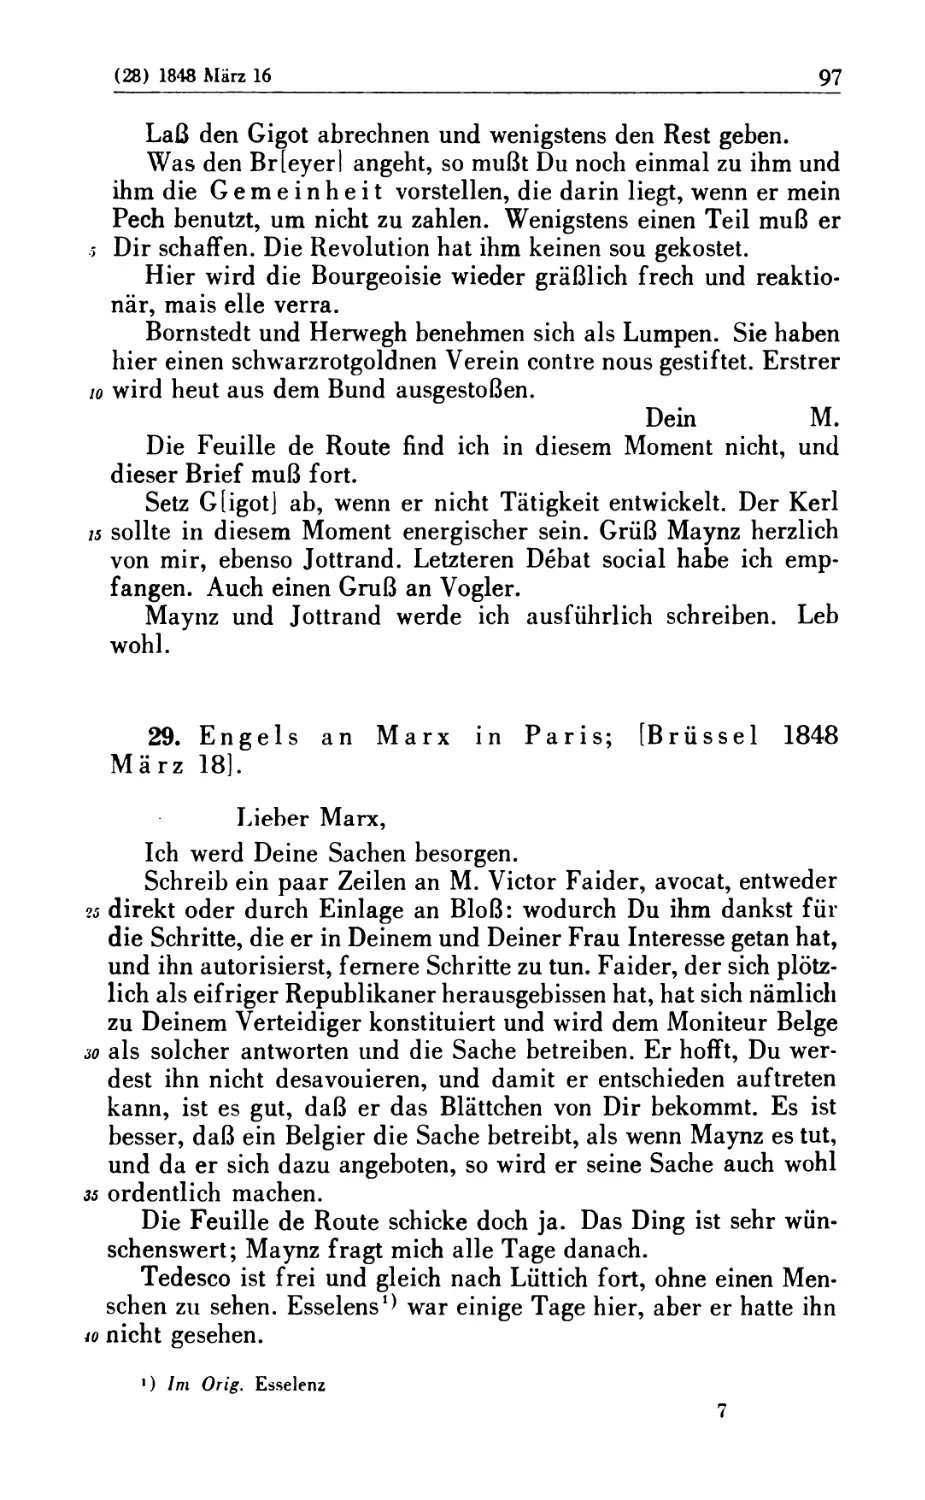 29. Engels an Marx in Paris; [Brüssel 1848 März 18]